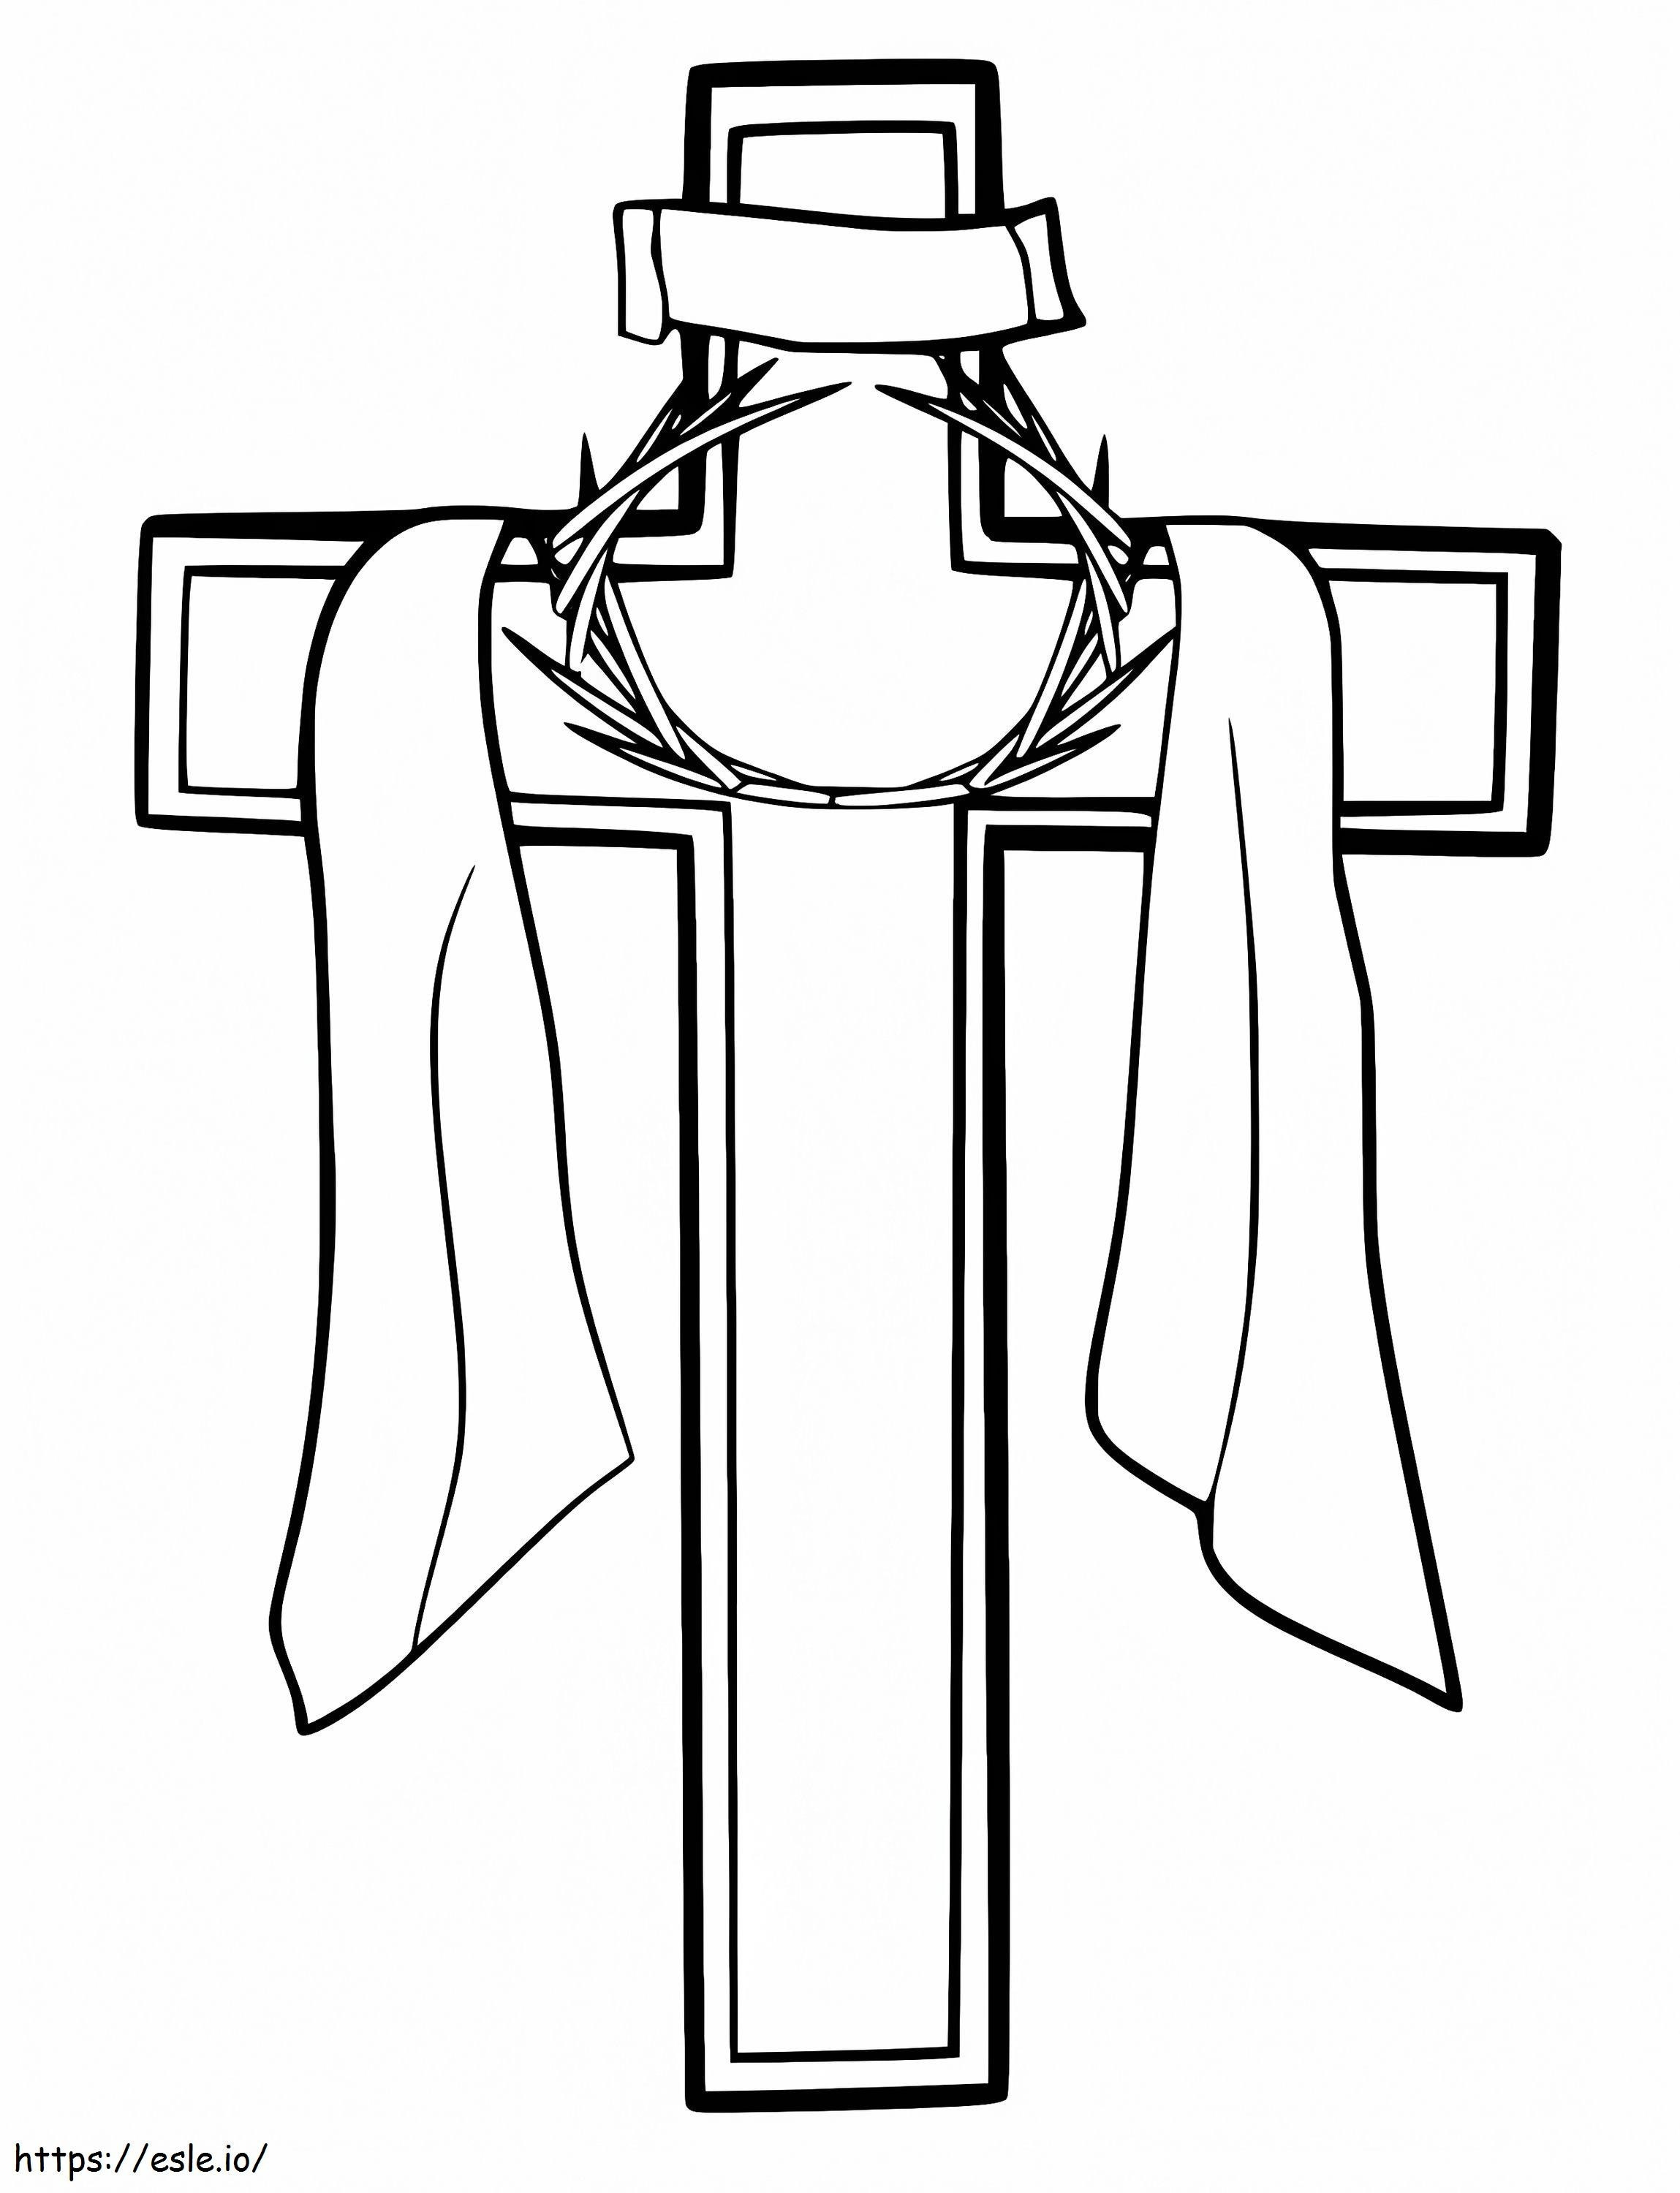 Pasen-kruis met kroon kleurplaat kleurplaat